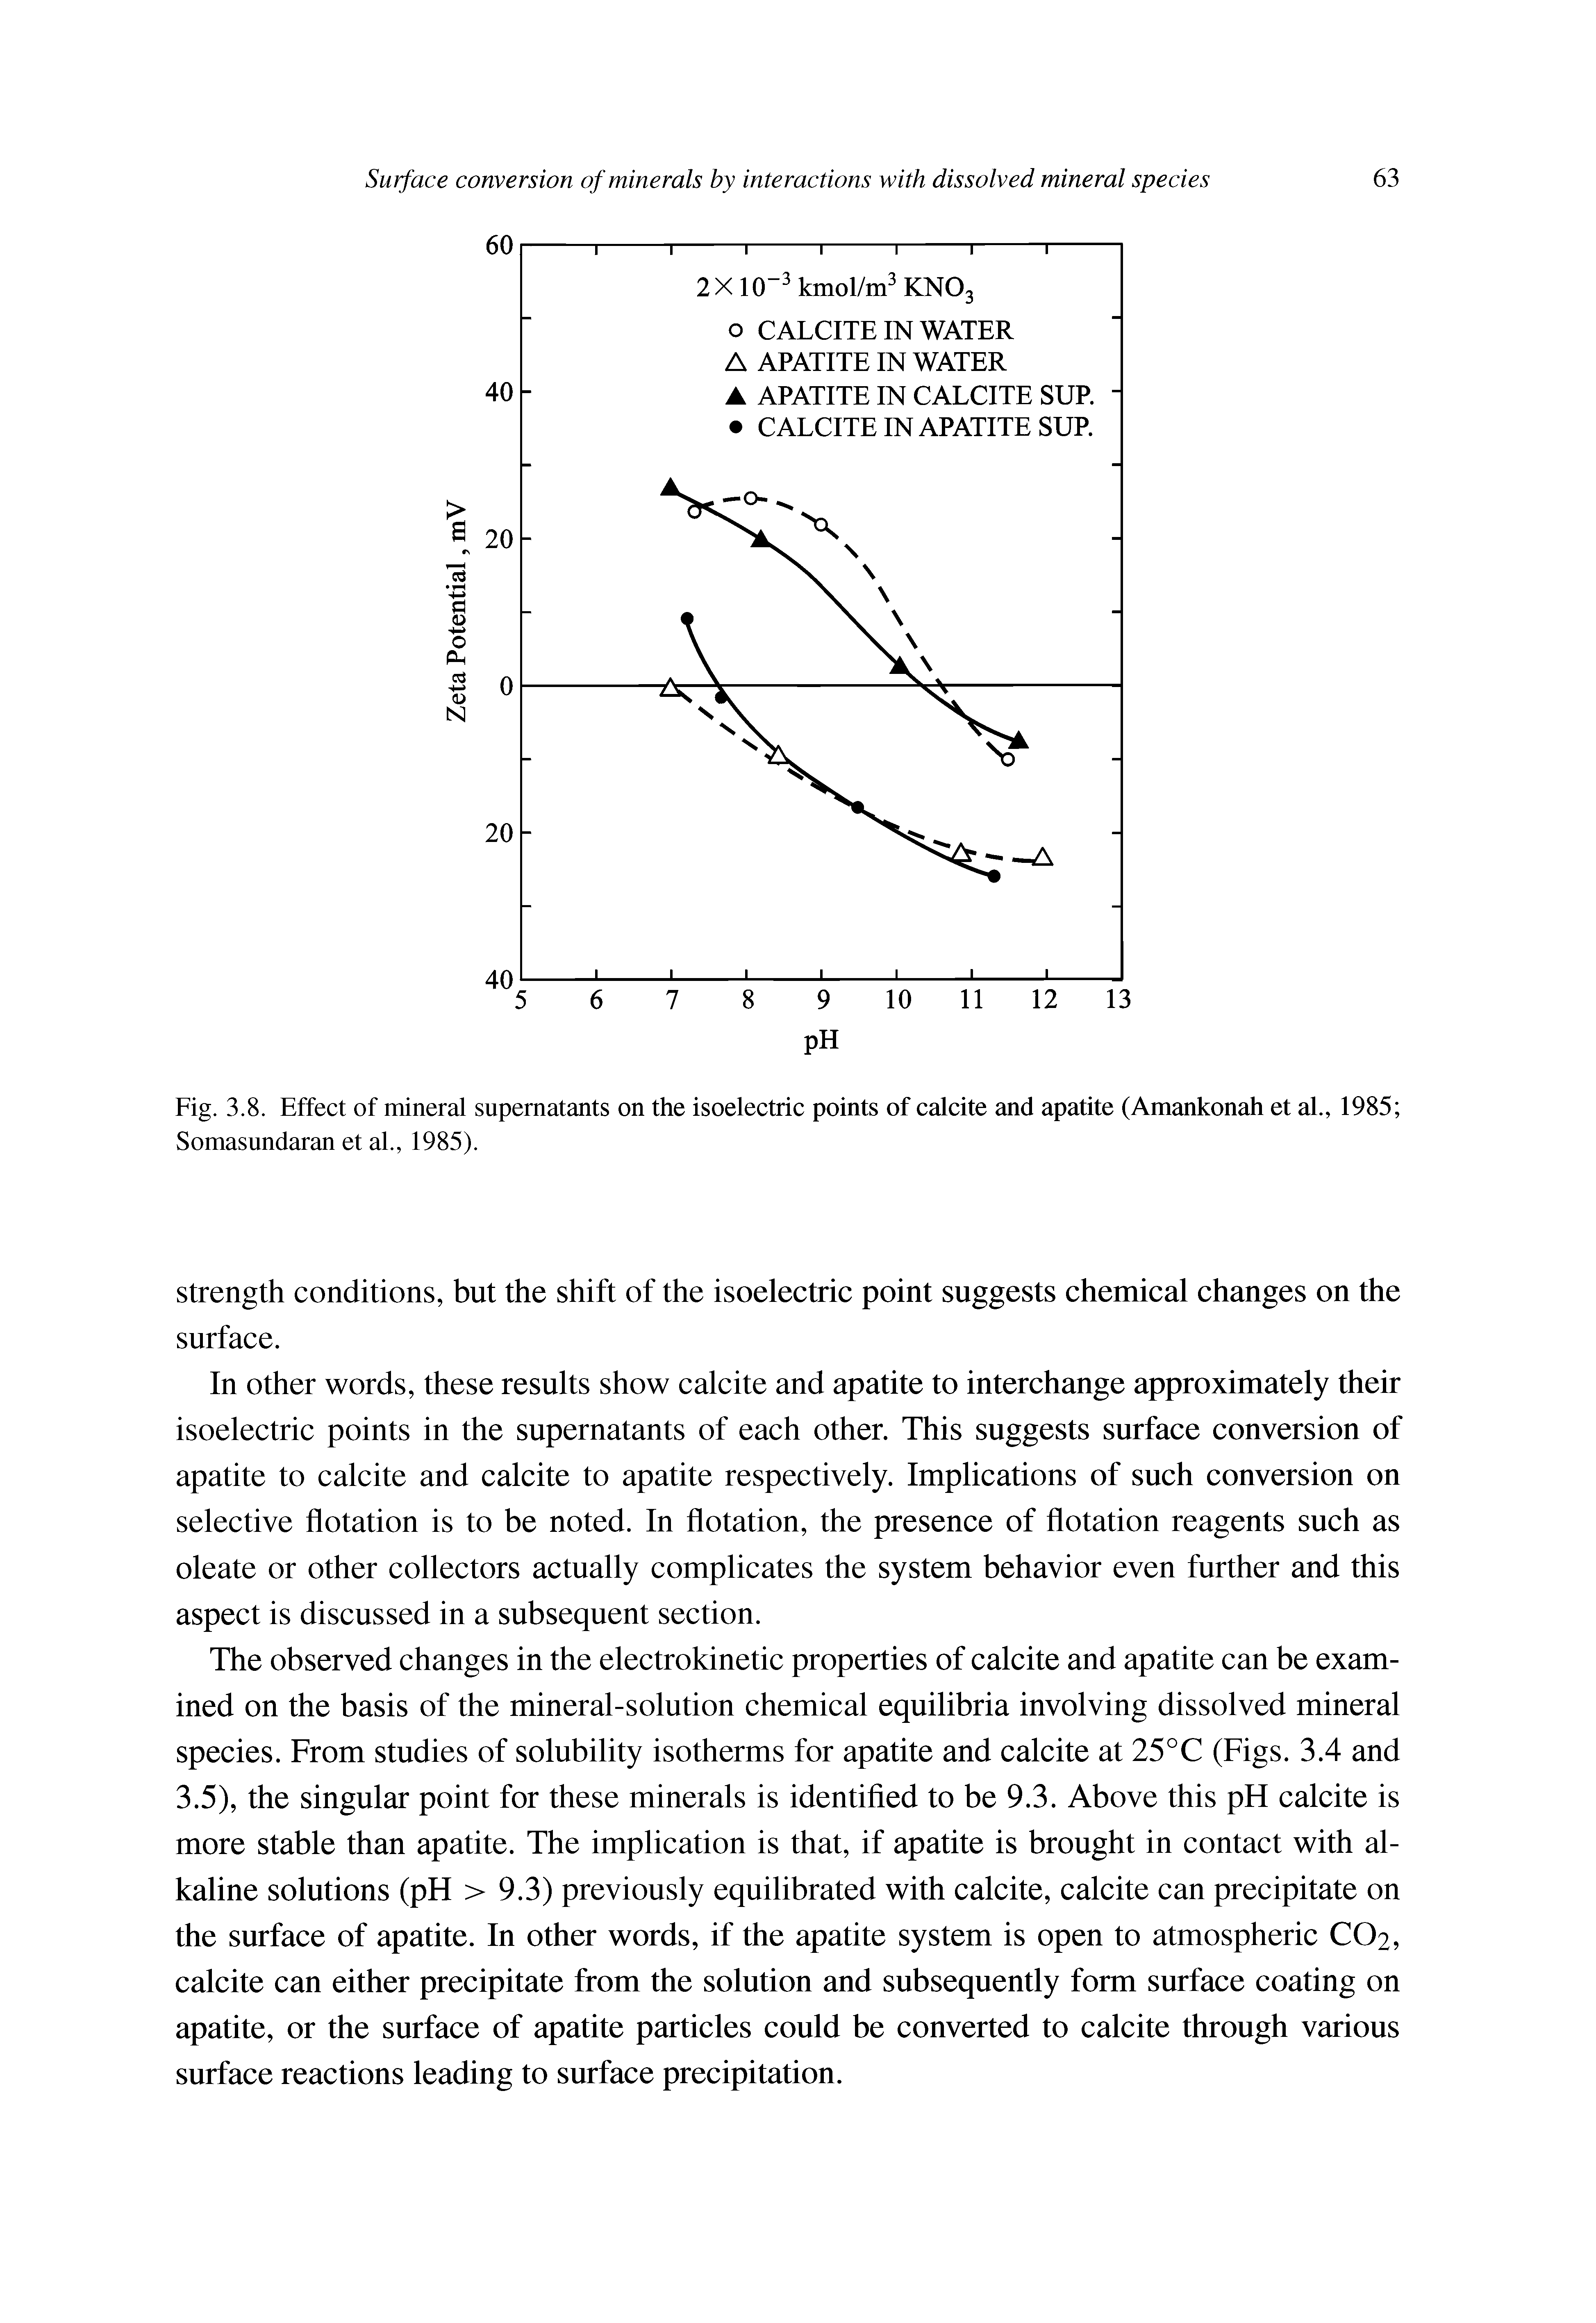 Fig. 3.8. Effect of mineral supernatants on the isoelectric points of calcite and apatite (Amankonah et al., 1985 Somasundaran et al., 1985).